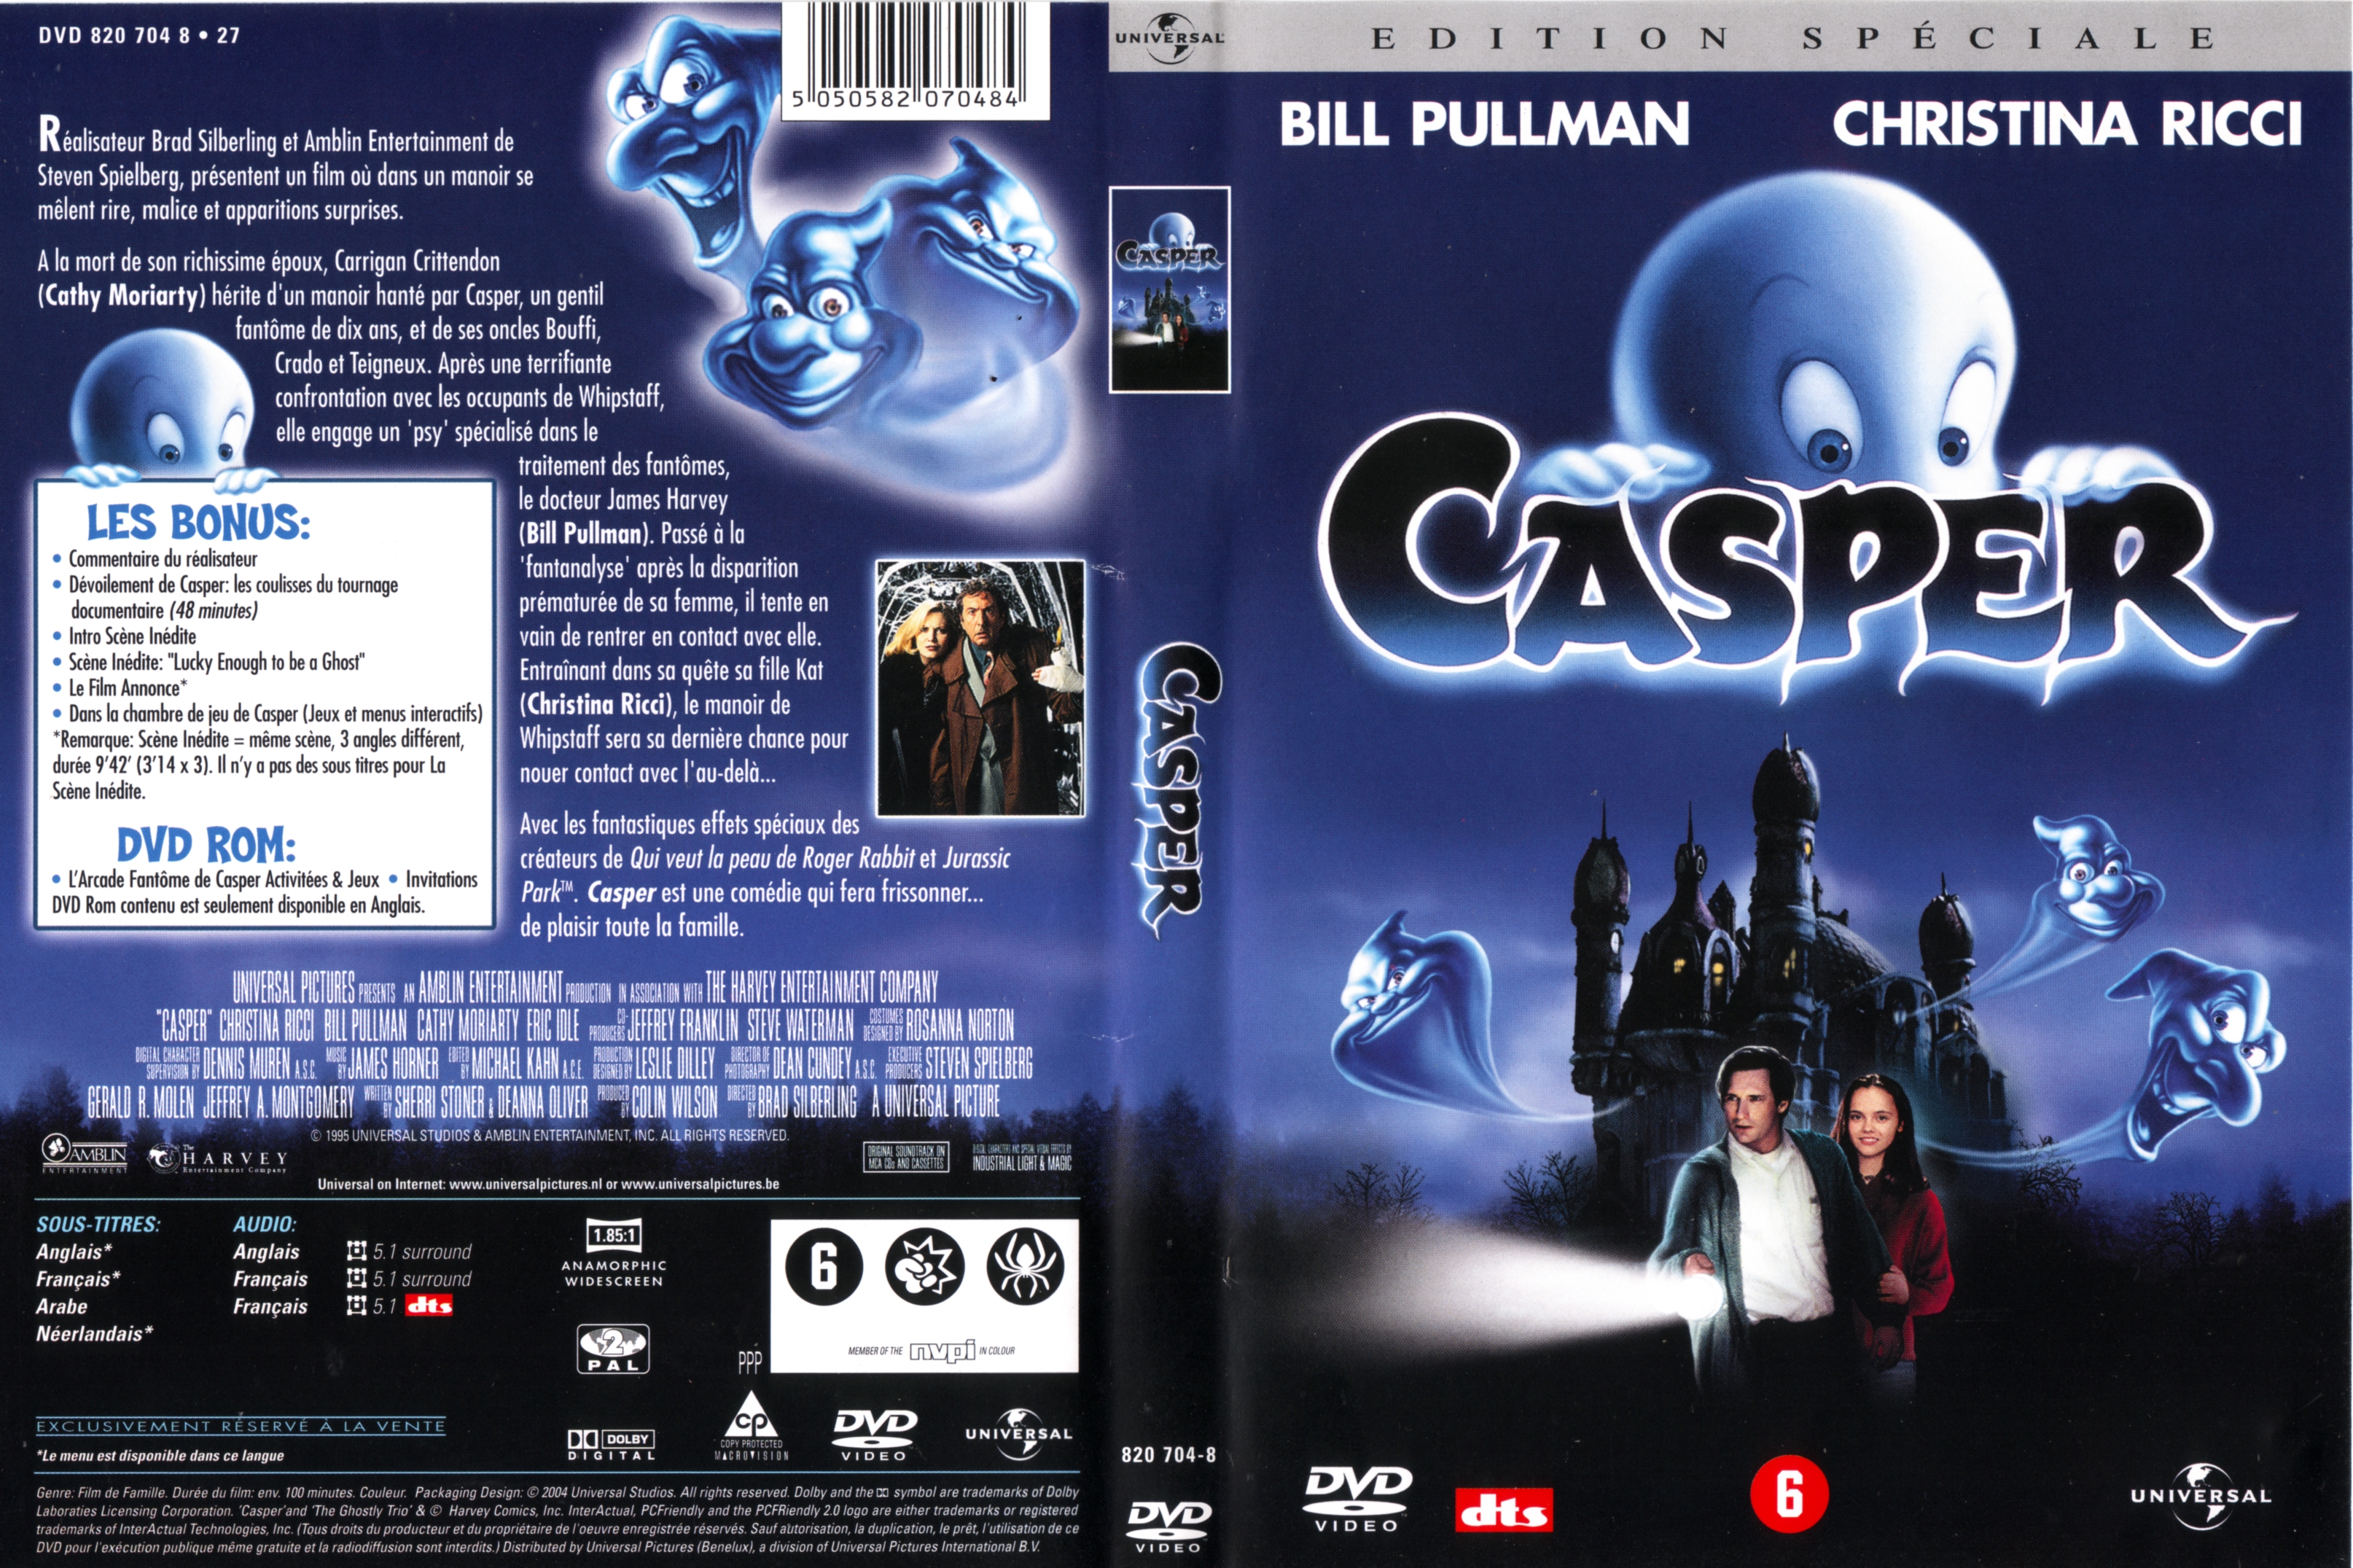 Jaquette DVD Casper v2